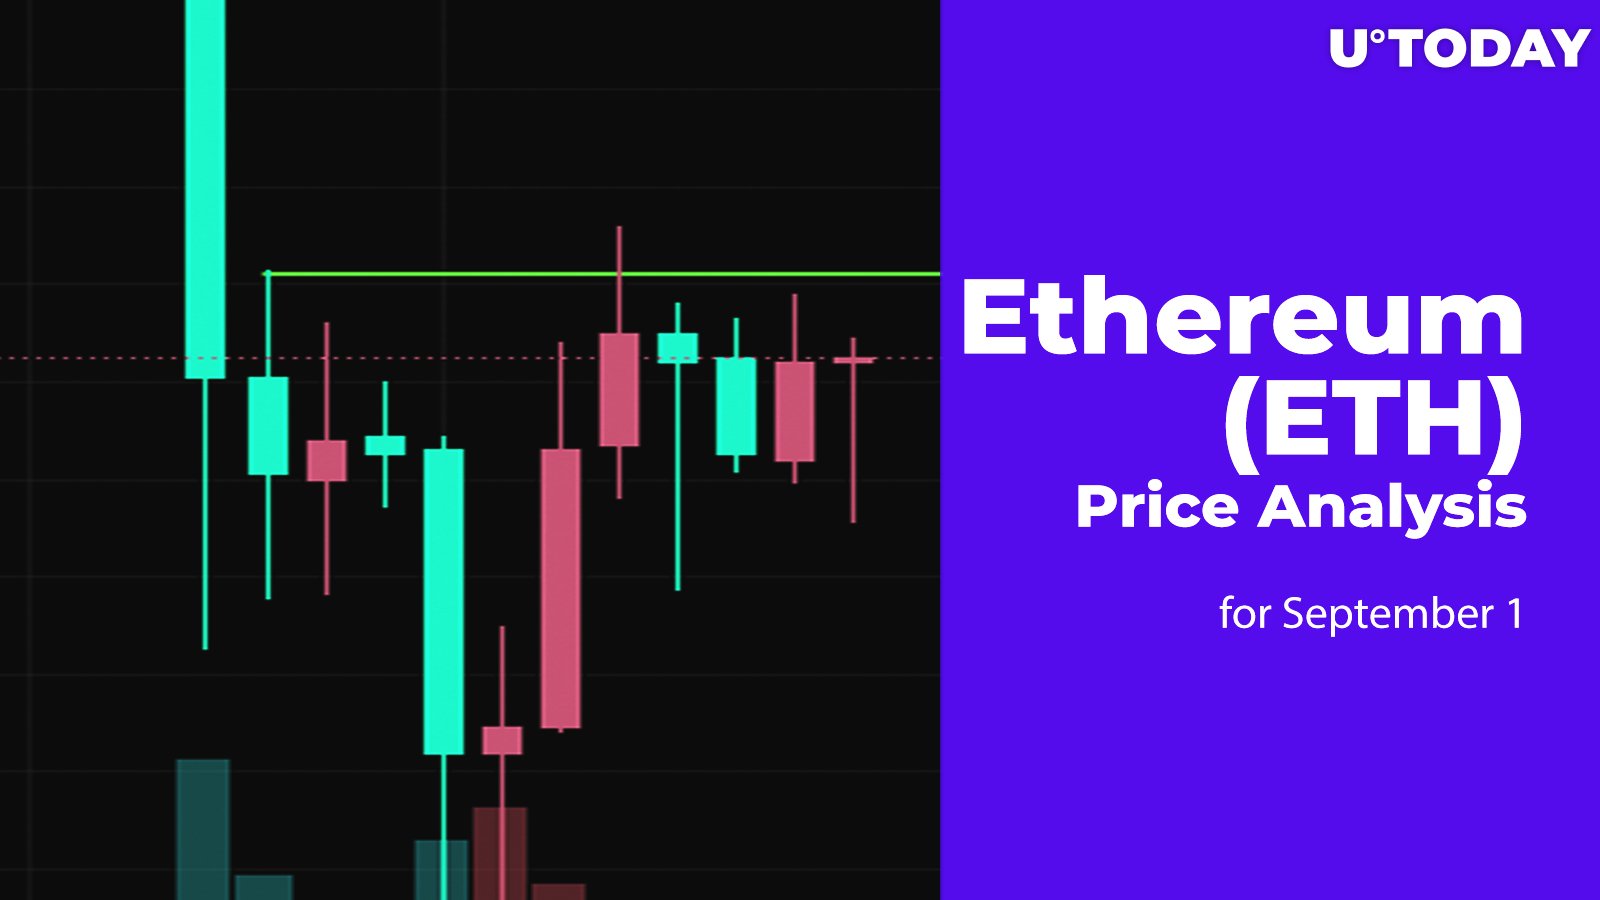 Ethereum (ETH) Price Analysis for September 1